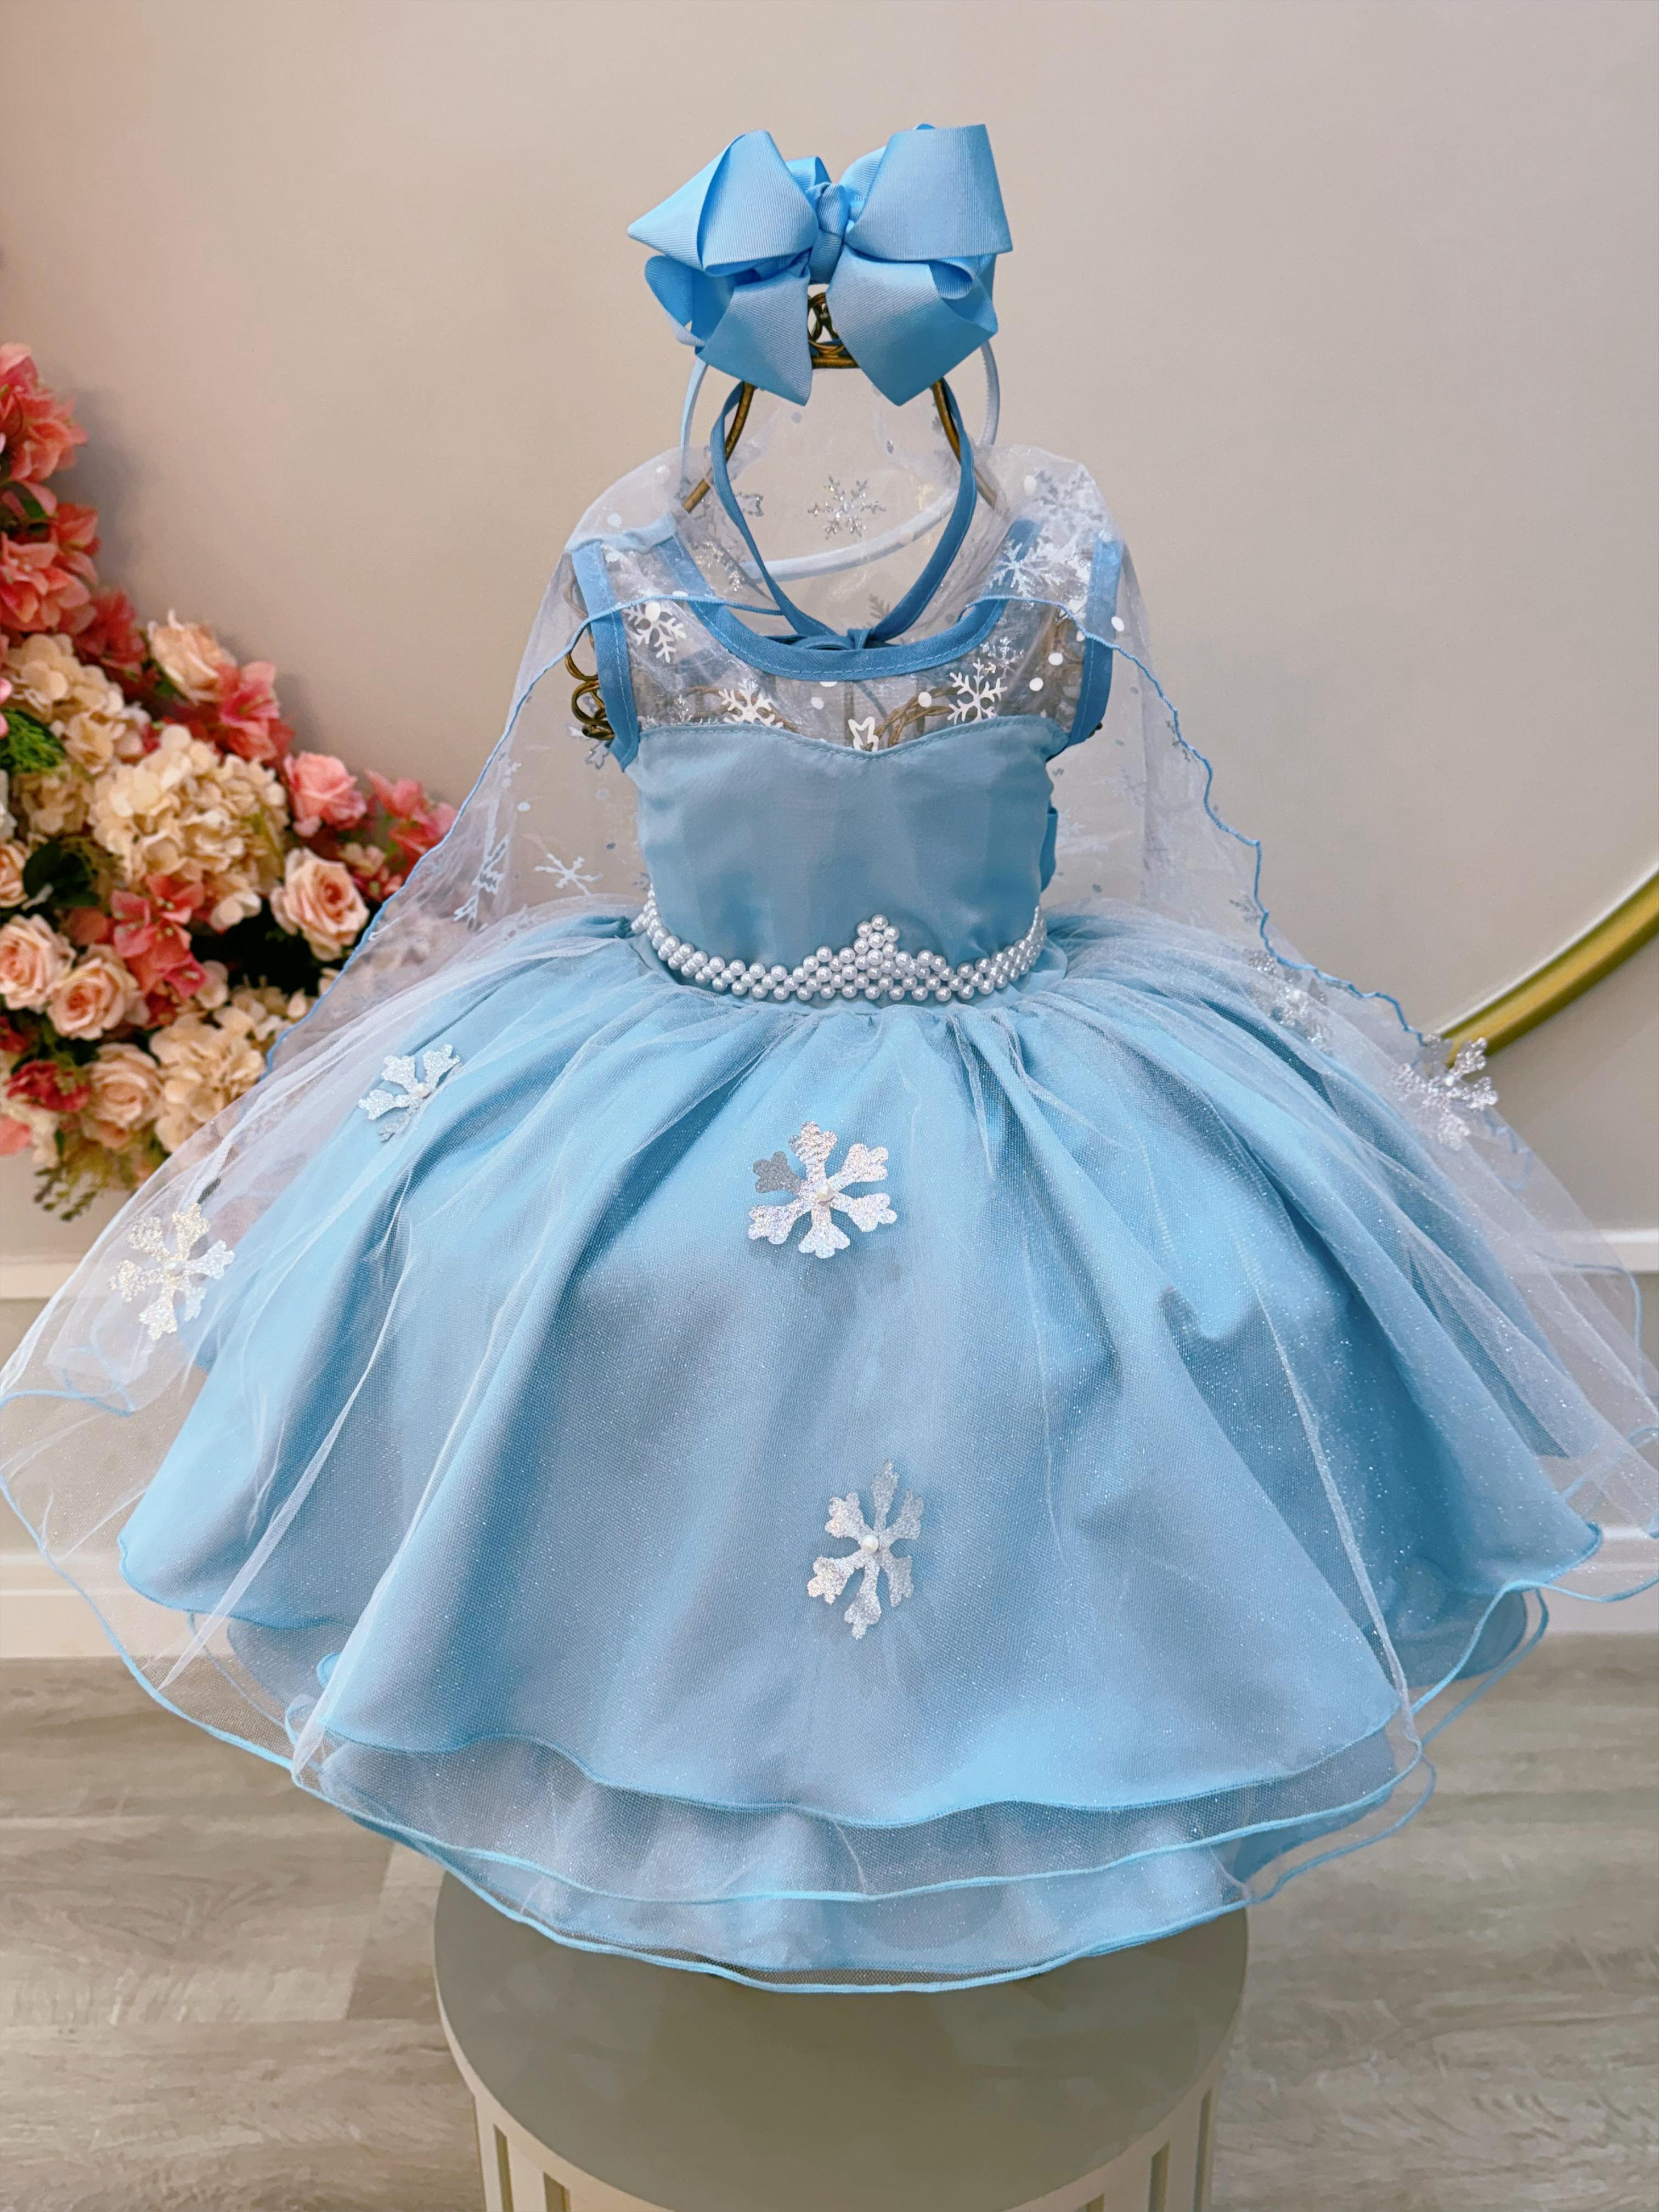 Vestido Infantil Frozen Princesas Capa de Luxo Aniversário